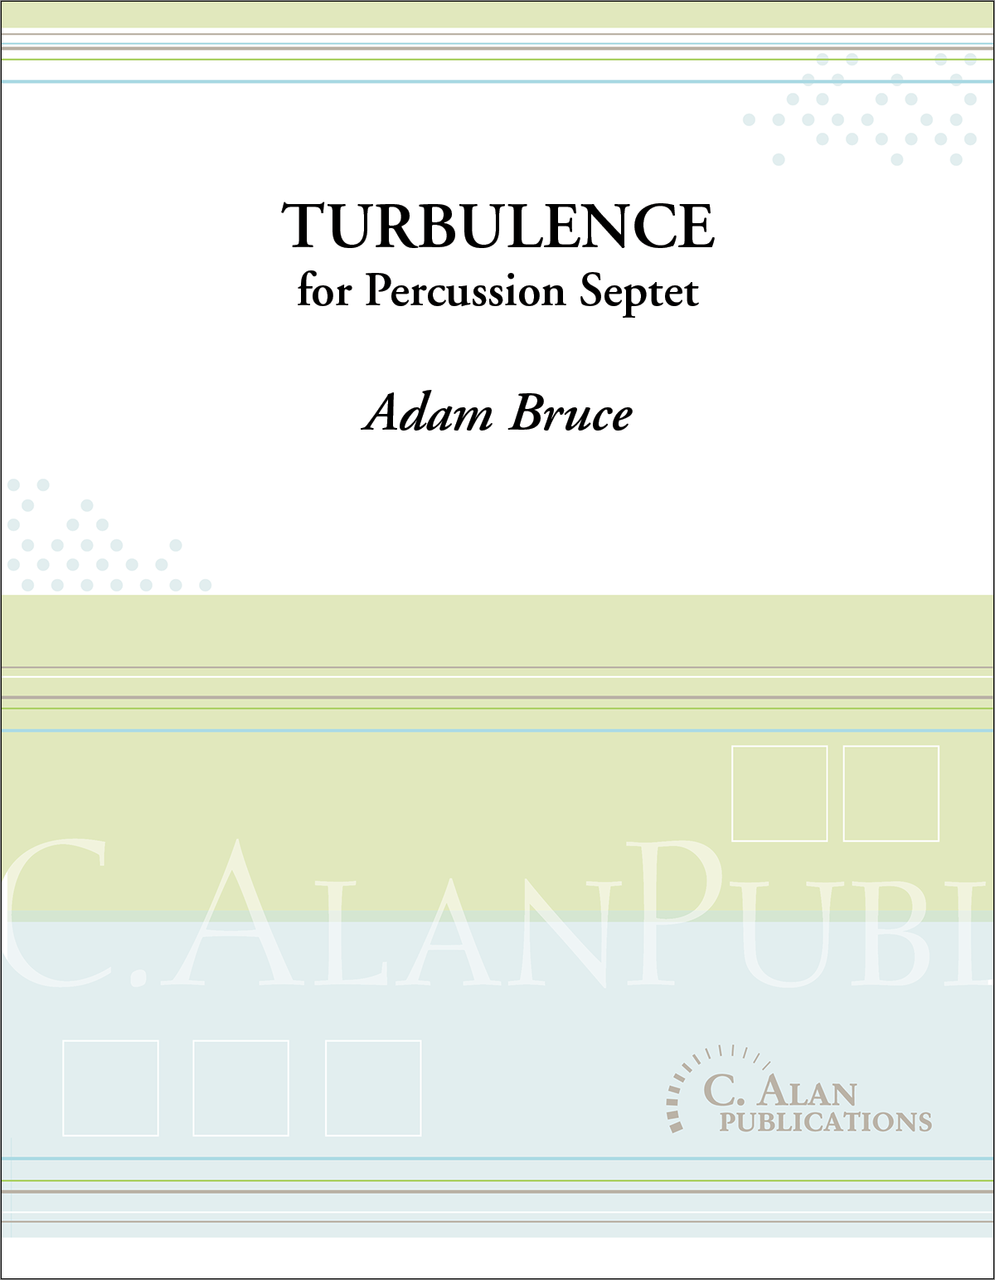 Turbulence by Adam Bruce